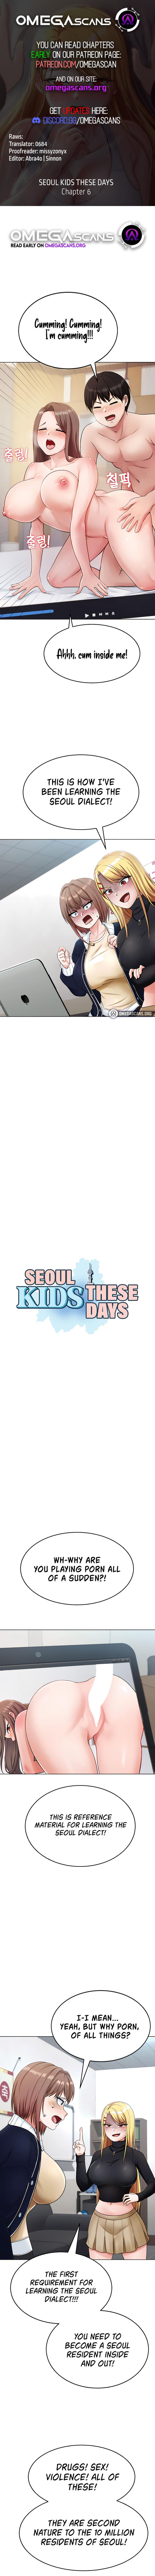 Seoul Kids these Days 55